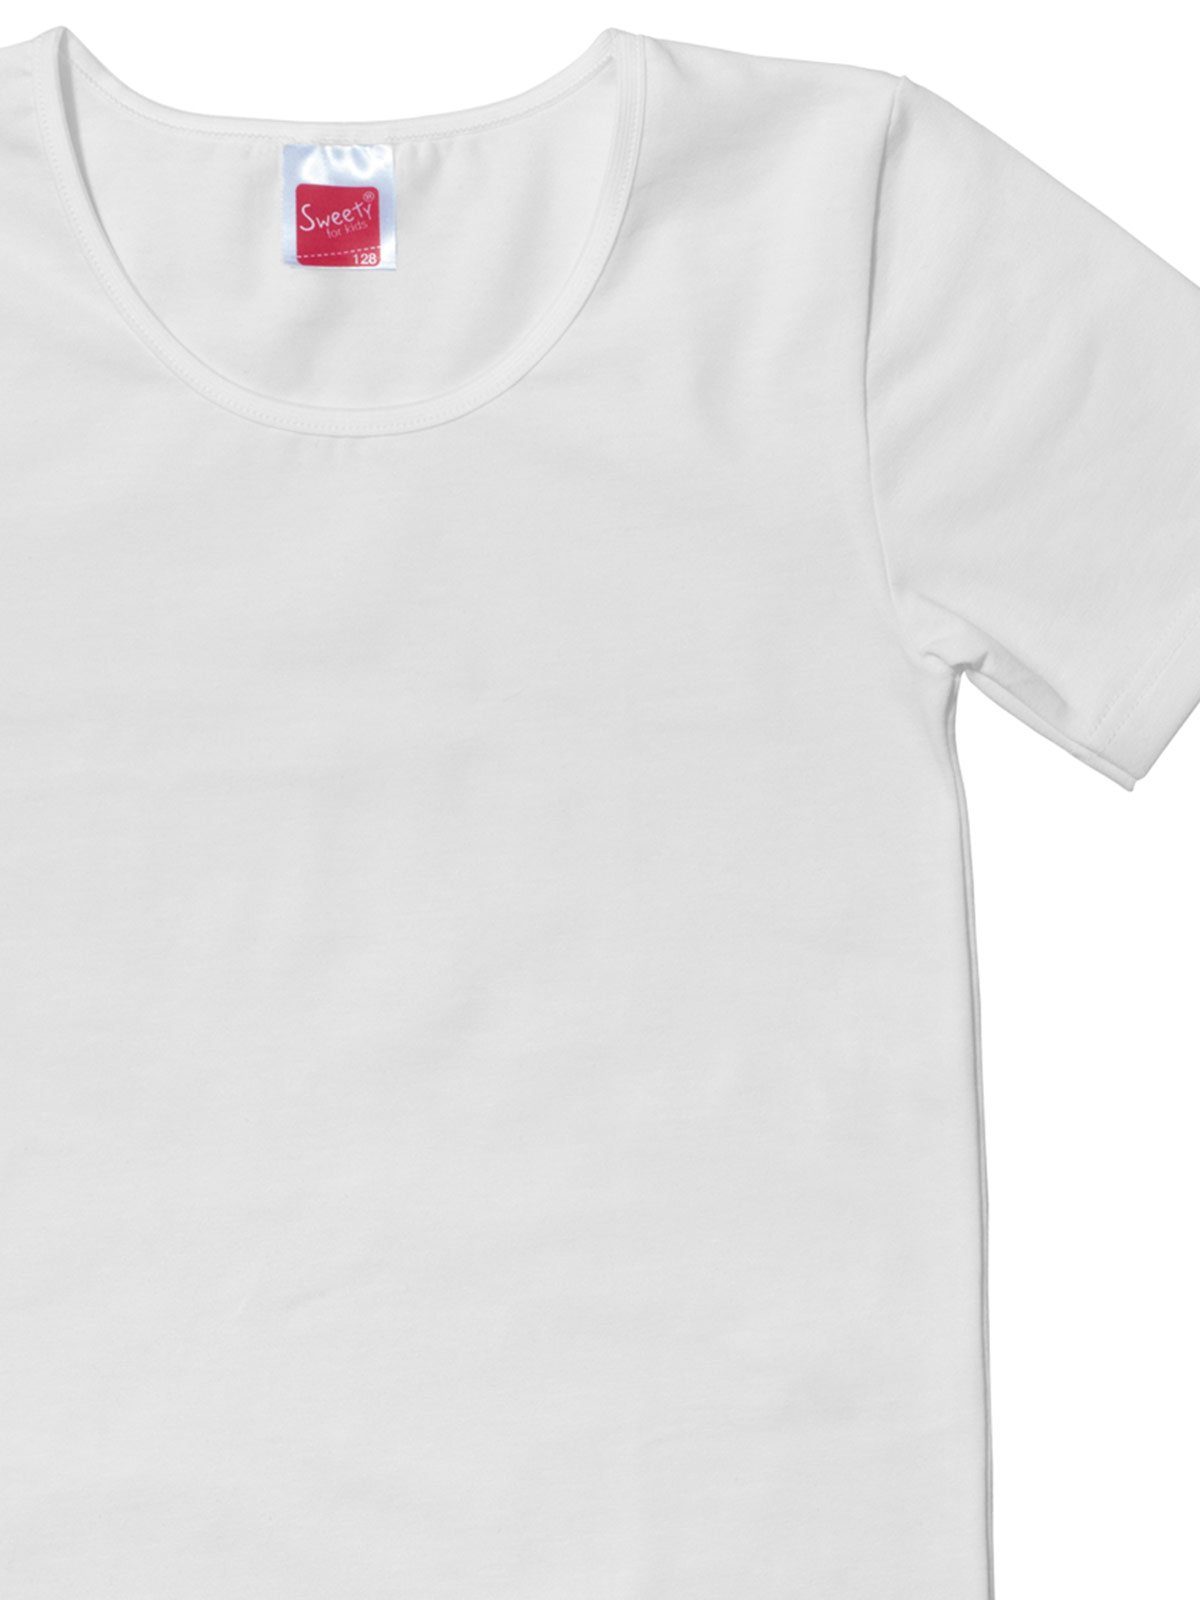 (Spar-Set, hohe 2er for Single Kids 2-St) Shirt Mädchen Markenqualität Jersey Sweety Unterhemd Sparpack weiss